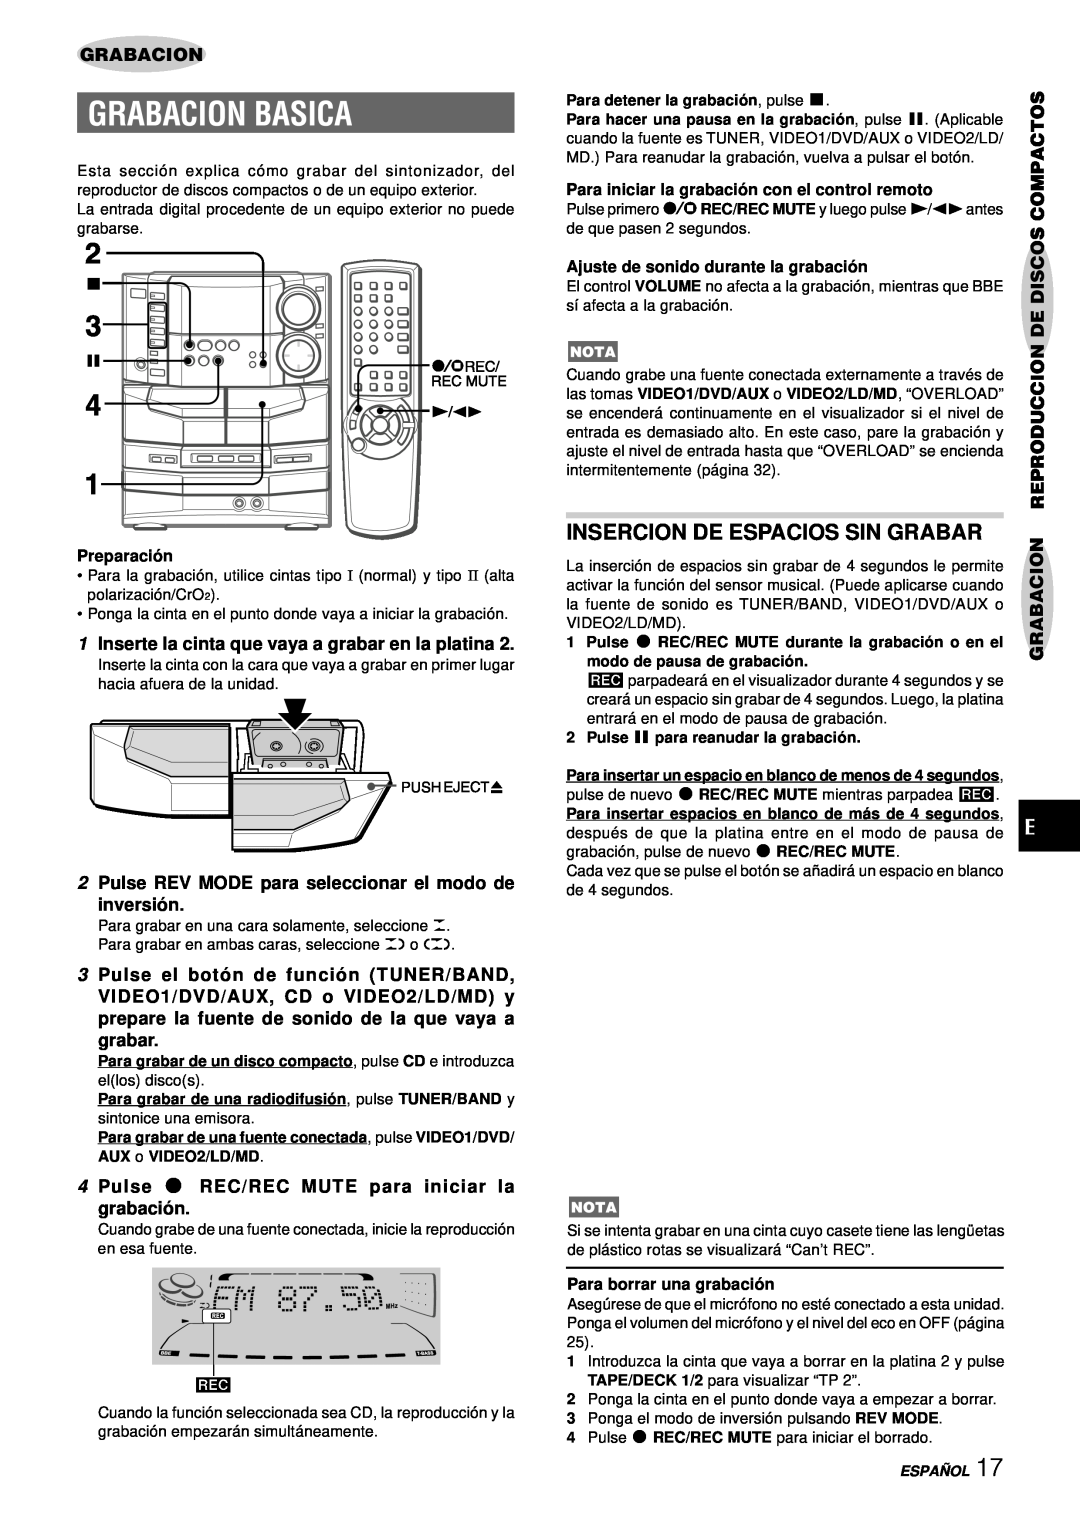 Aiwa NSX-DS8 manual Grabacion Basica, Insercion De Espacios Sin Grabar, 1Inserte la cinta que vaya a grabar en la platina 